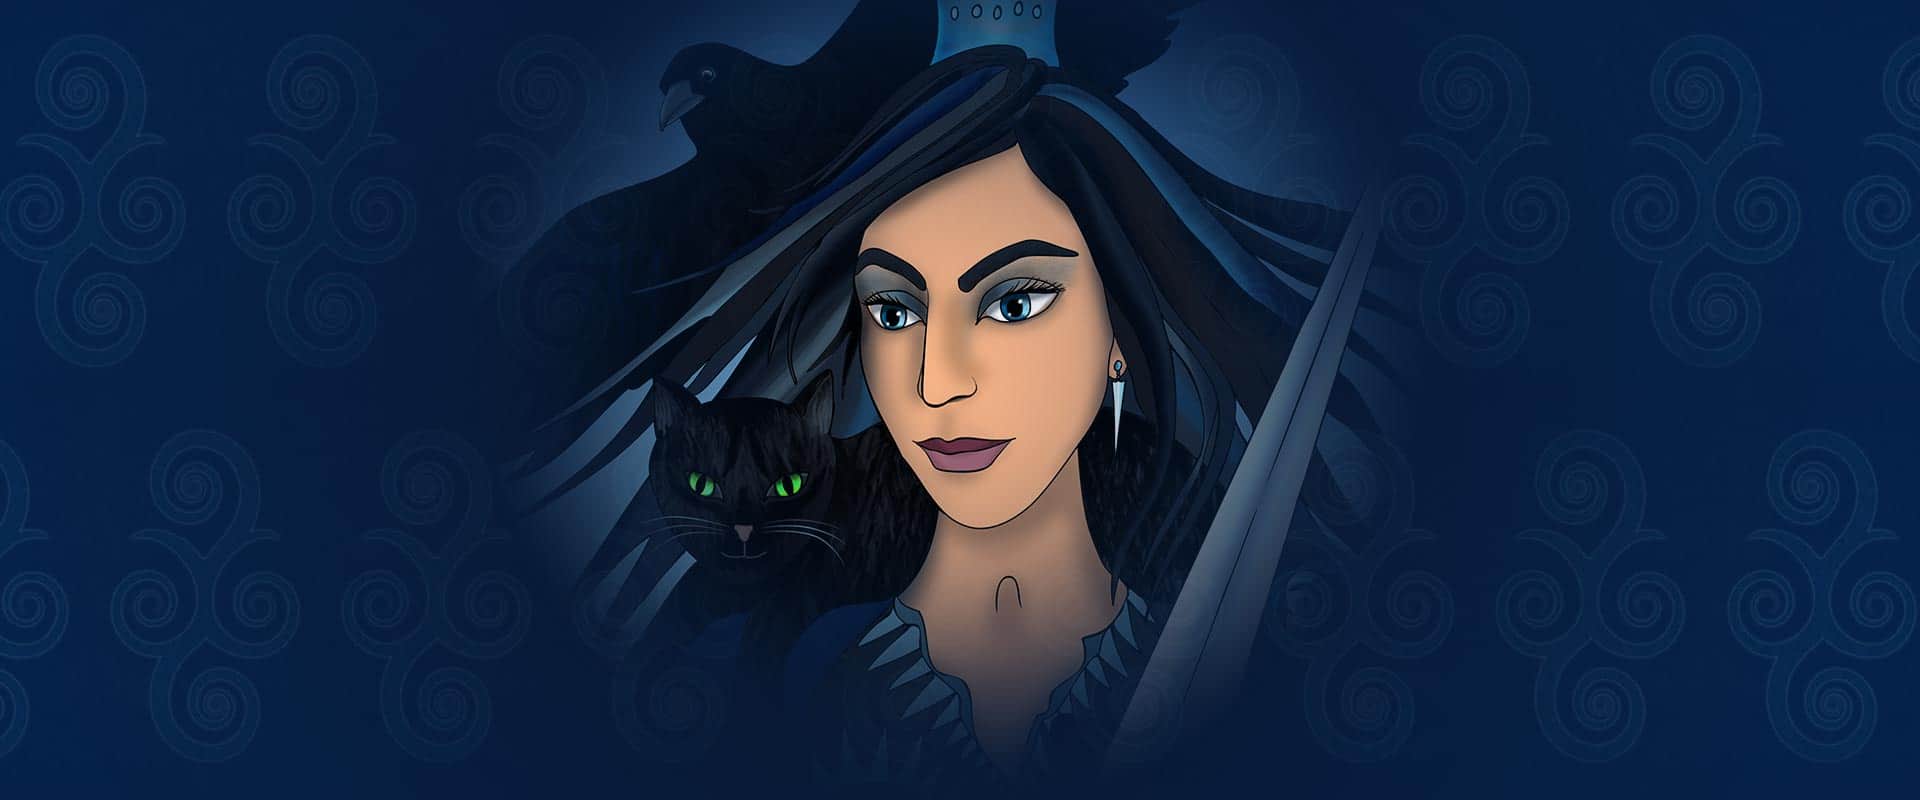 Queen of Swords artwork detail on dark blue background